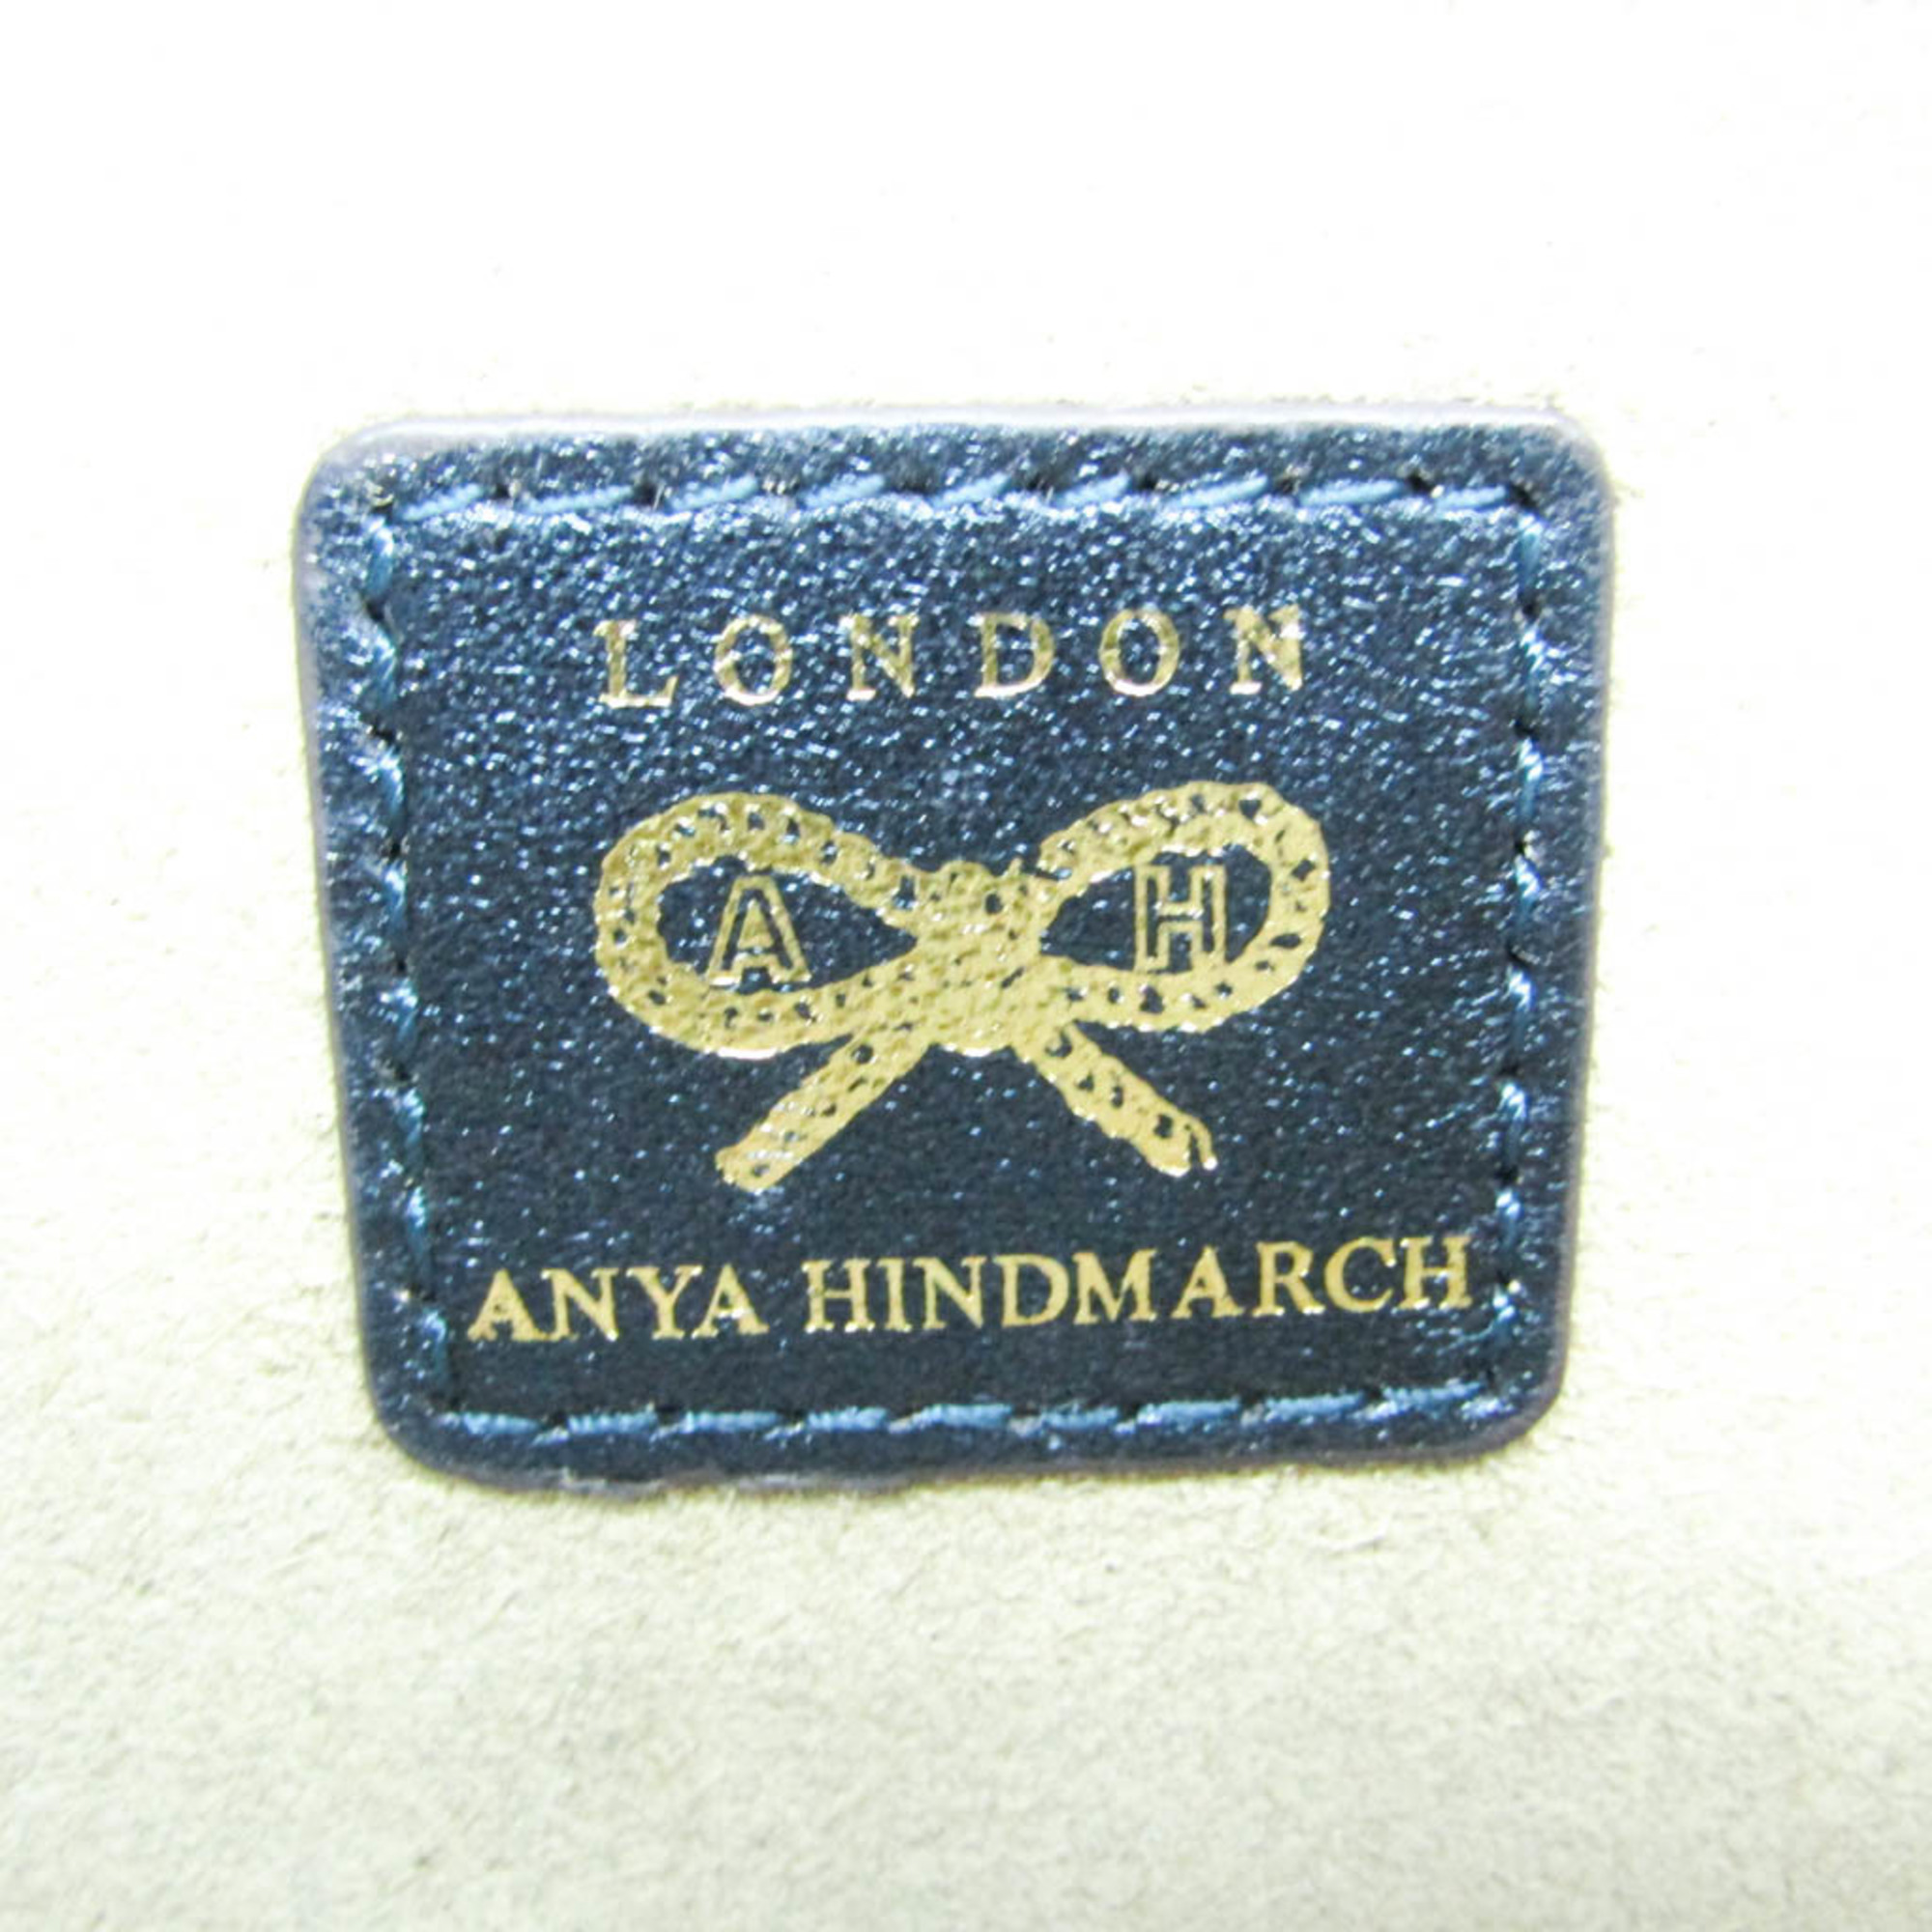 Anya Hindmarch Women's Leather,Suede Pouch,Shoulder Bag Dark Gray,Metallic Navy